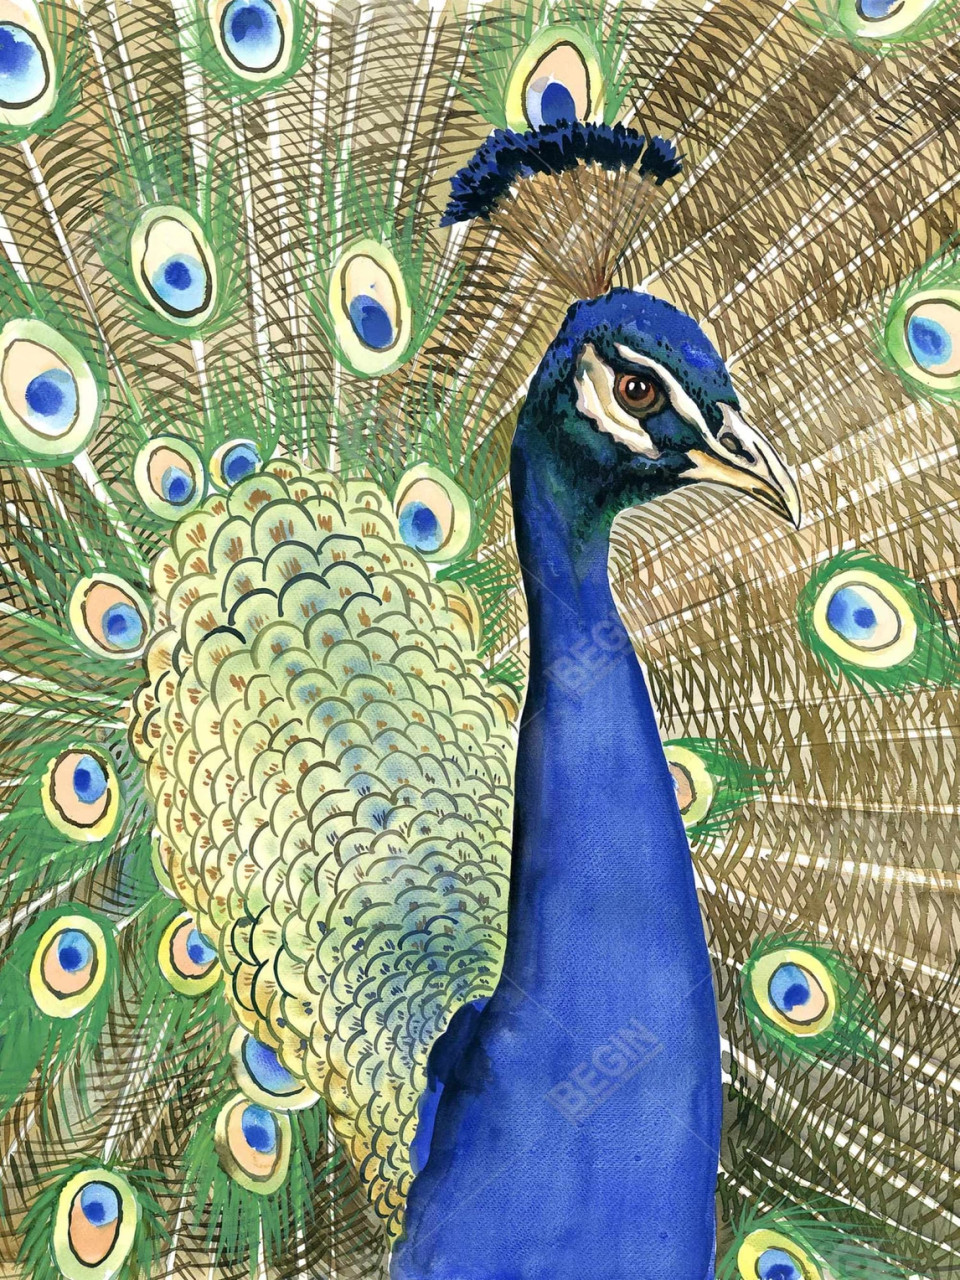 Peacock Feathers Fleece Blanket - Animal Decor